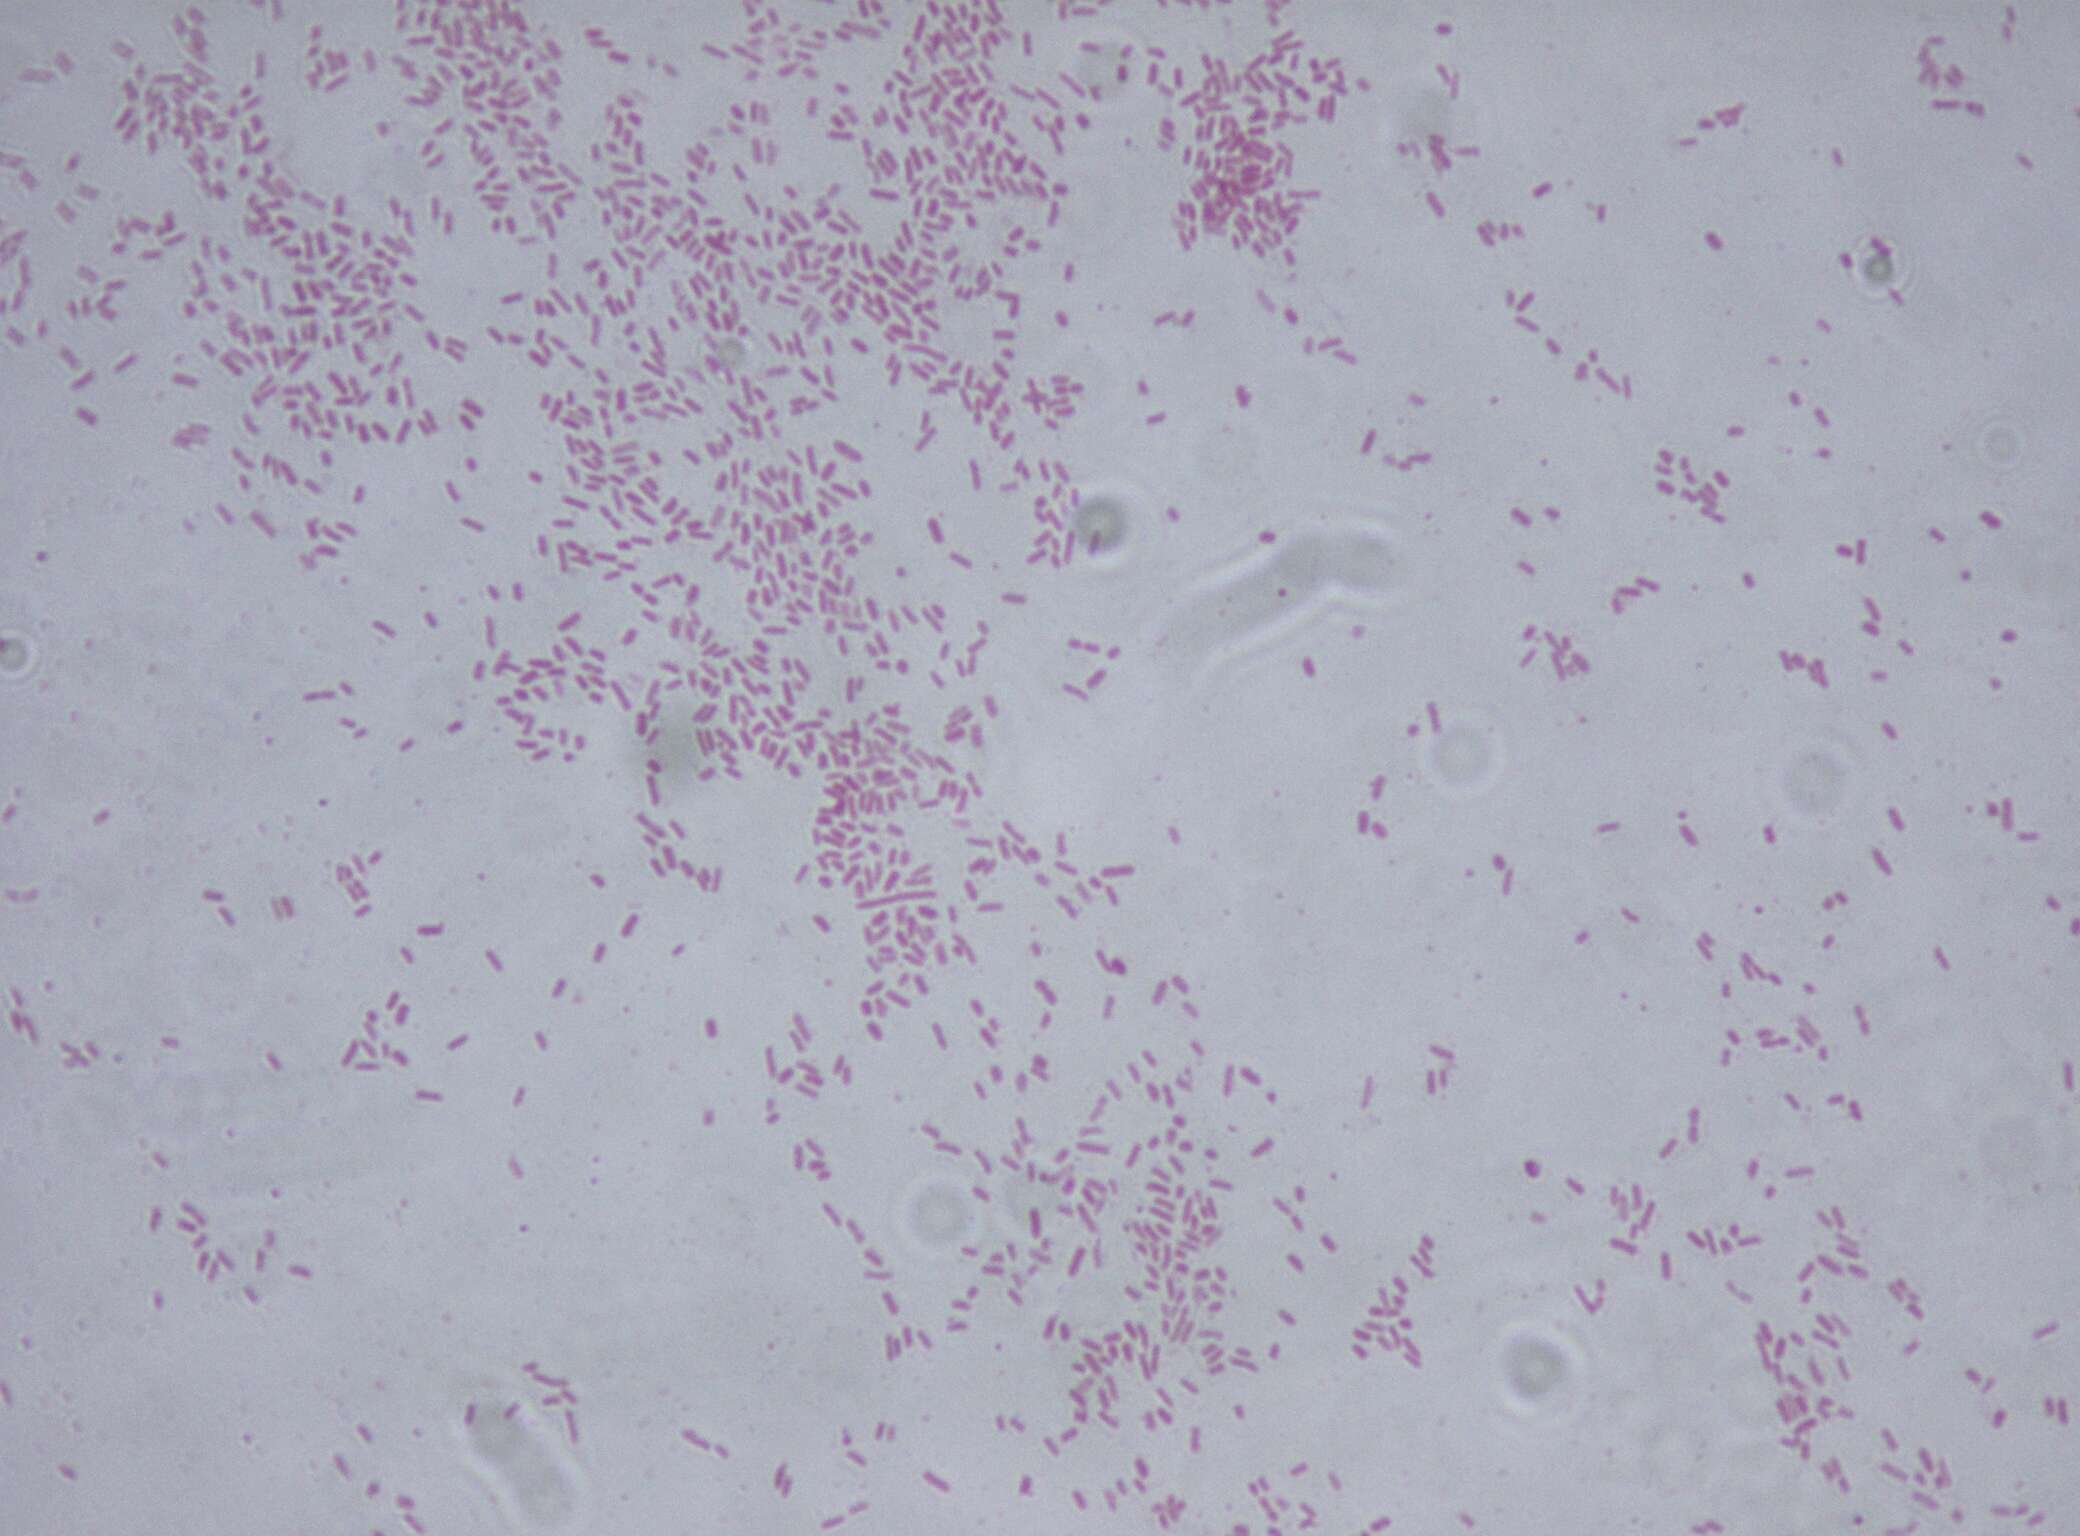 Image of Citrobacter